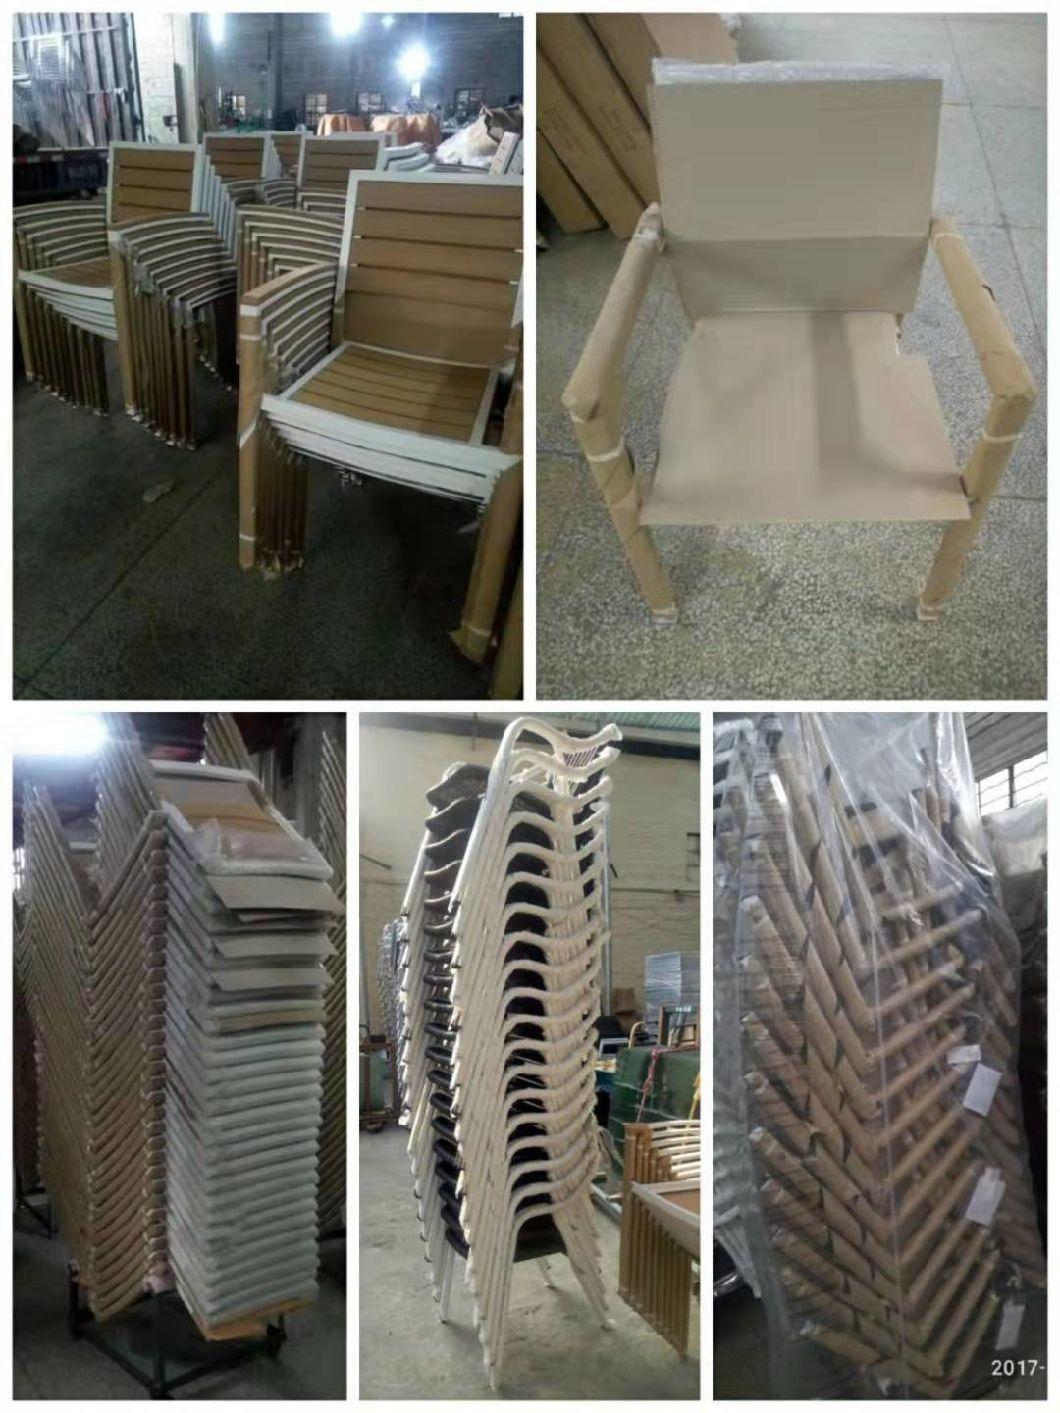 5 PCS Outdoor Polywood Aluminum Furniture Sets